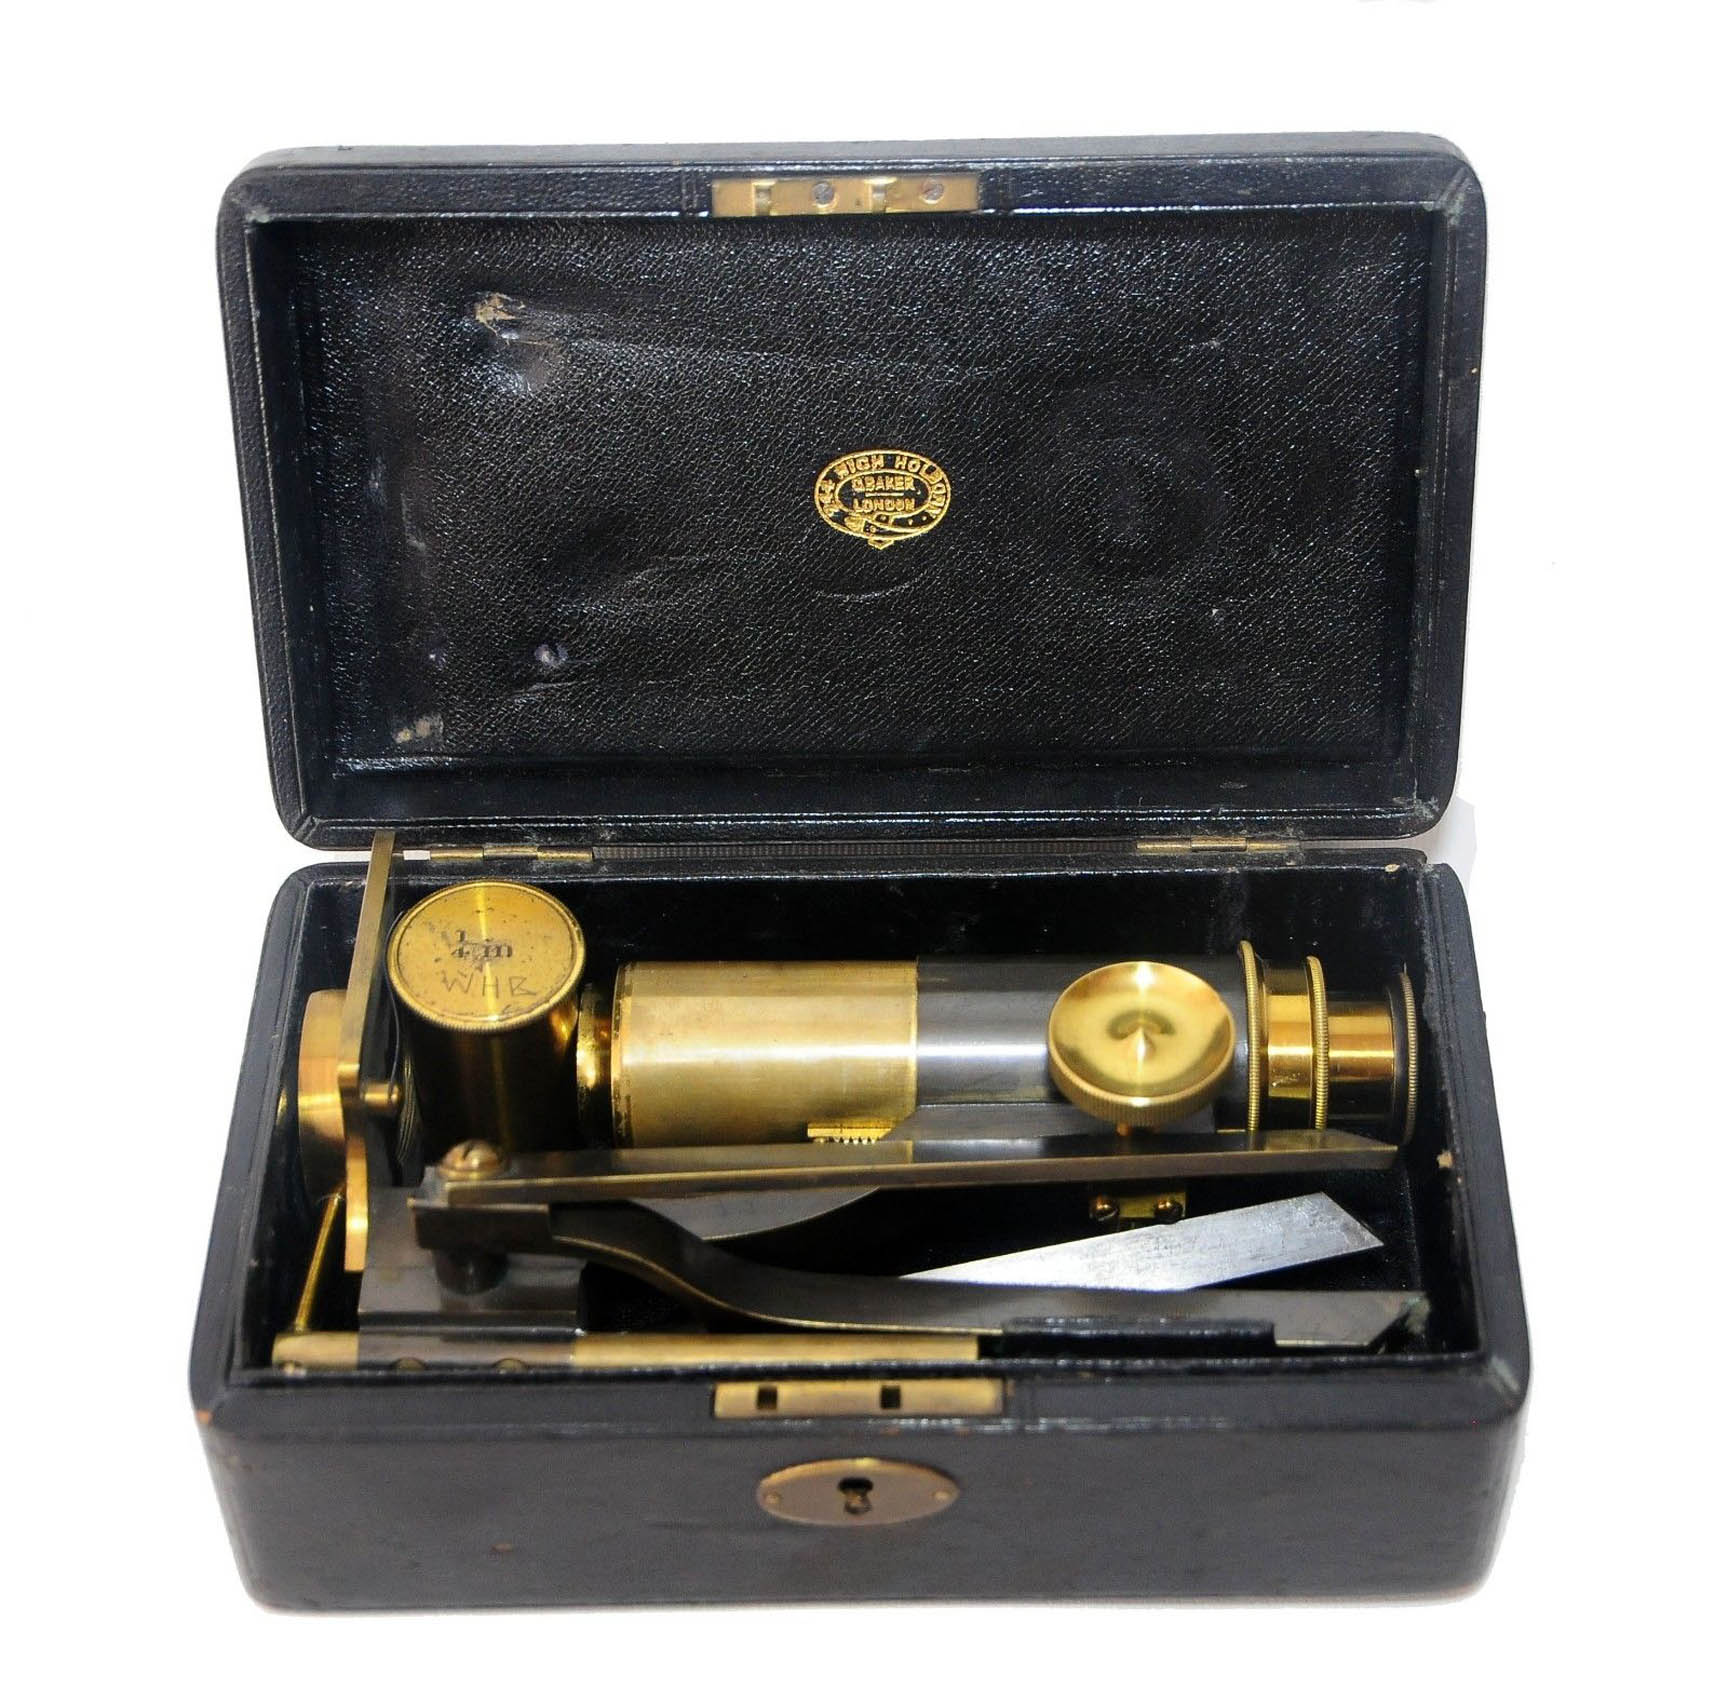 Baker New Portable Traveling Microscope